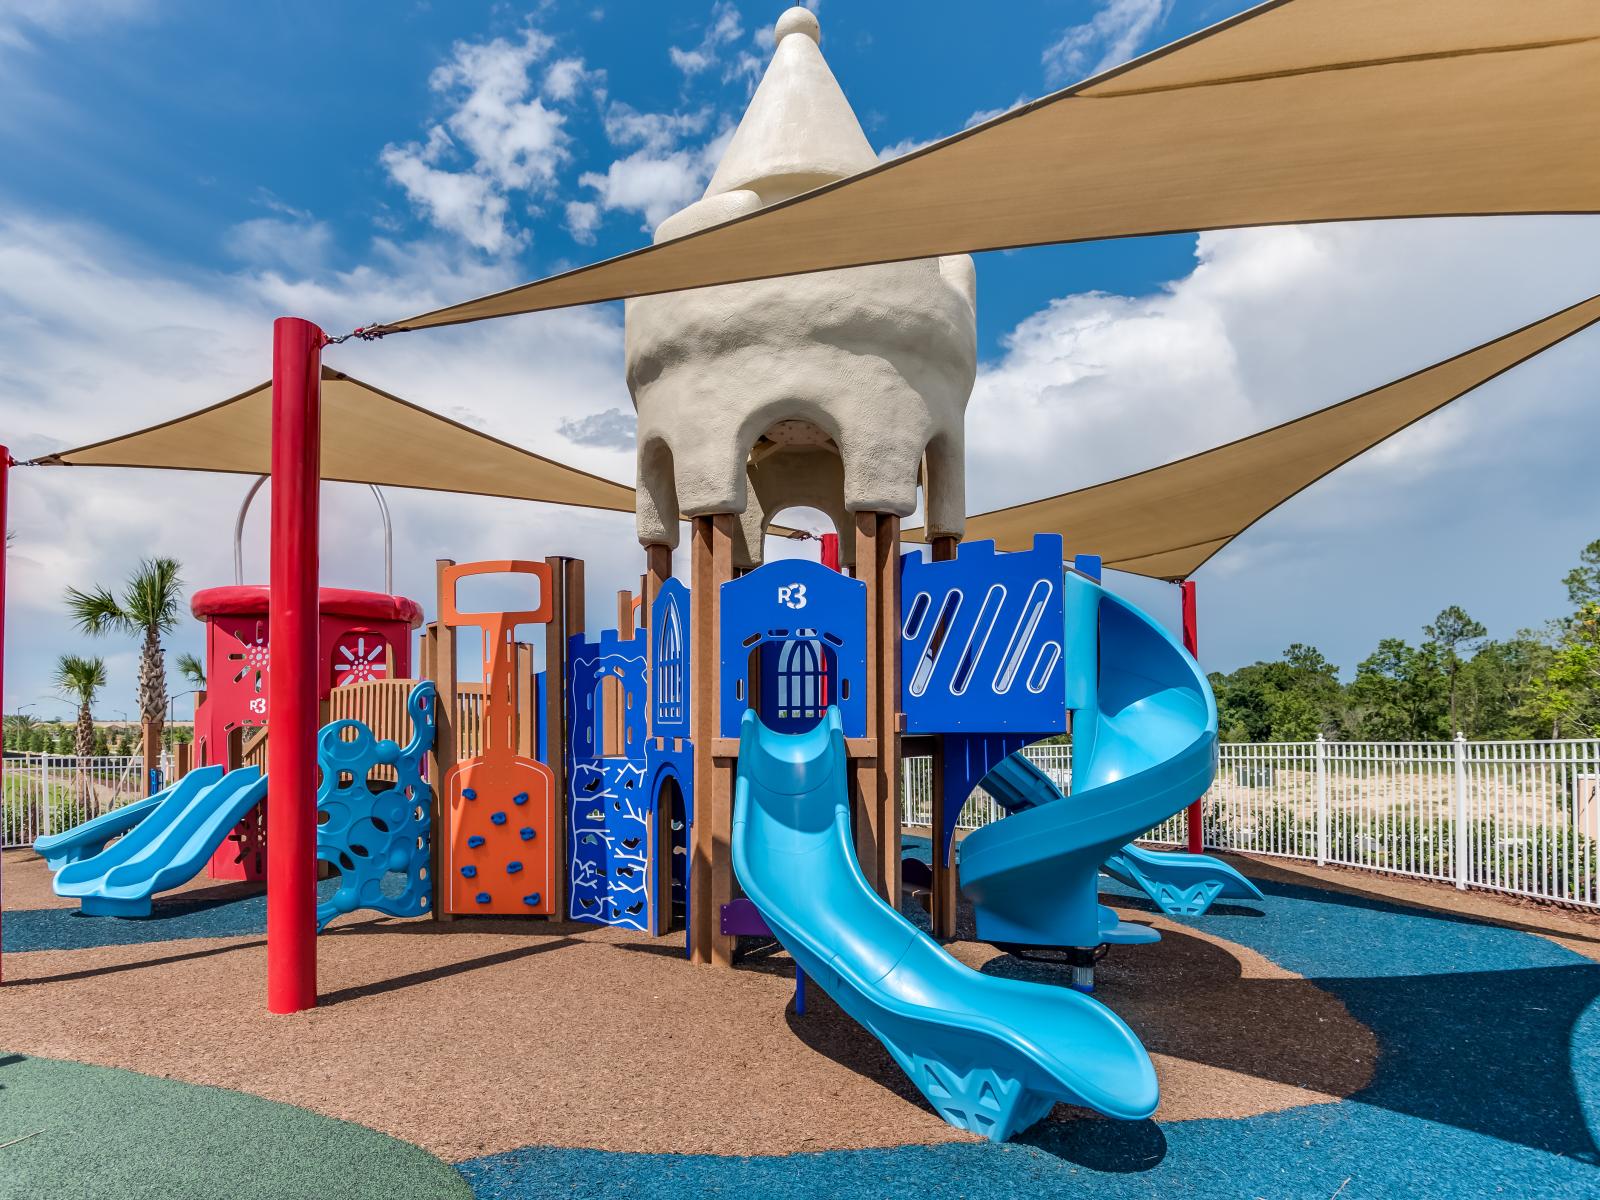 Solara Resort Childrens' Play Area